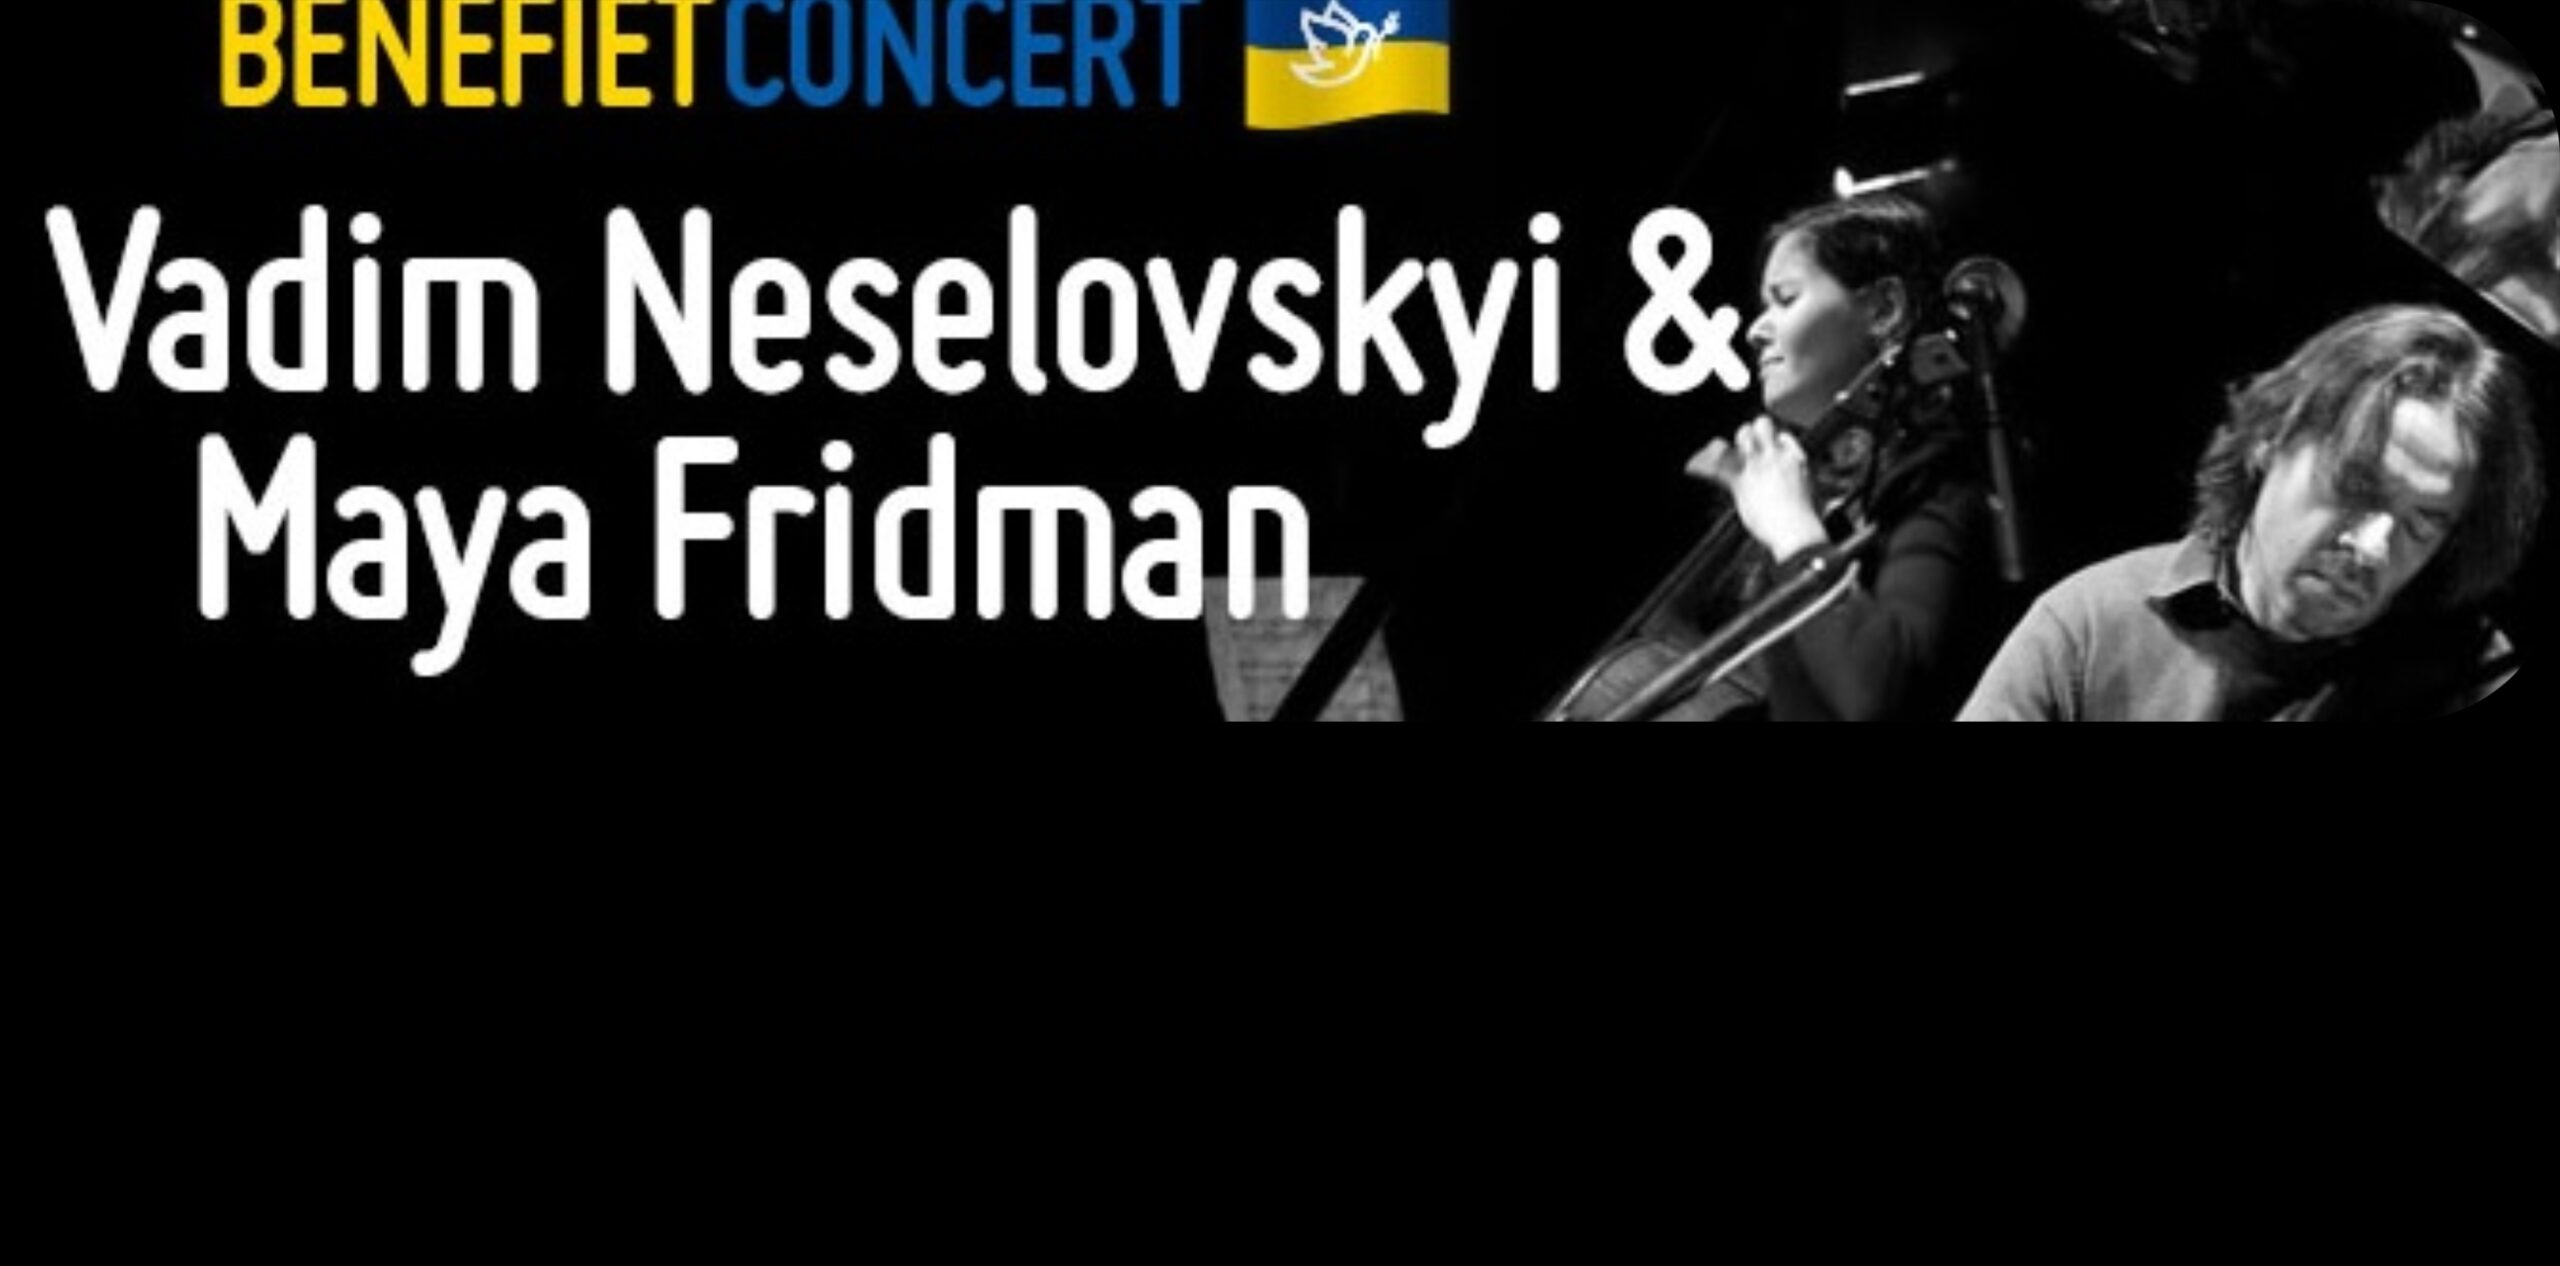 Fundraising concert for Ukraine